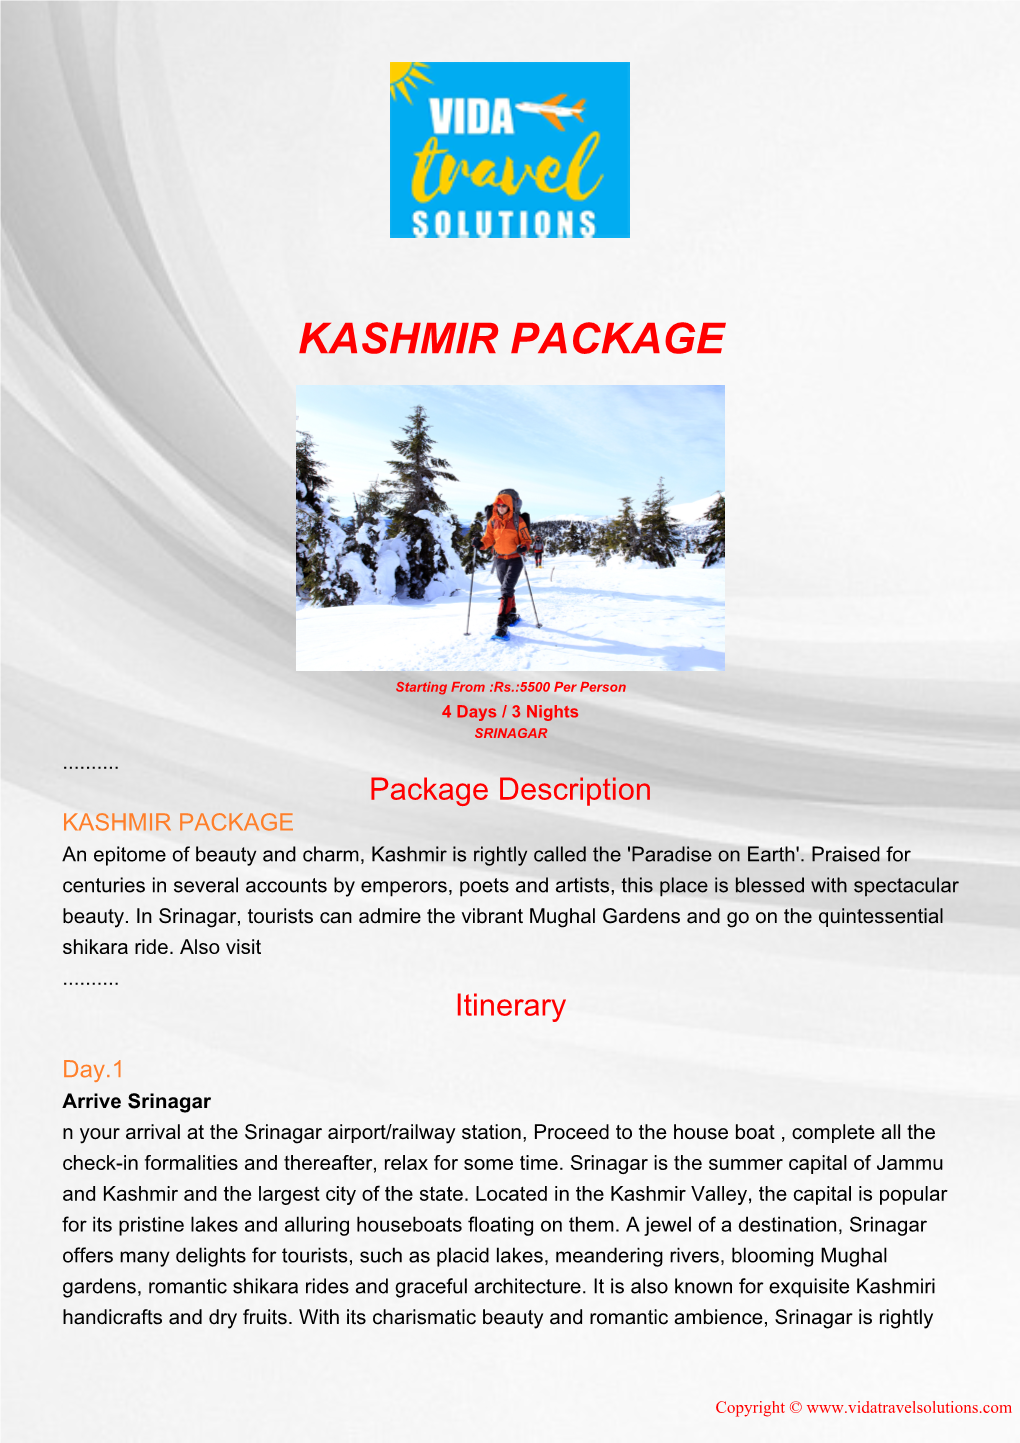 Kashmir Package